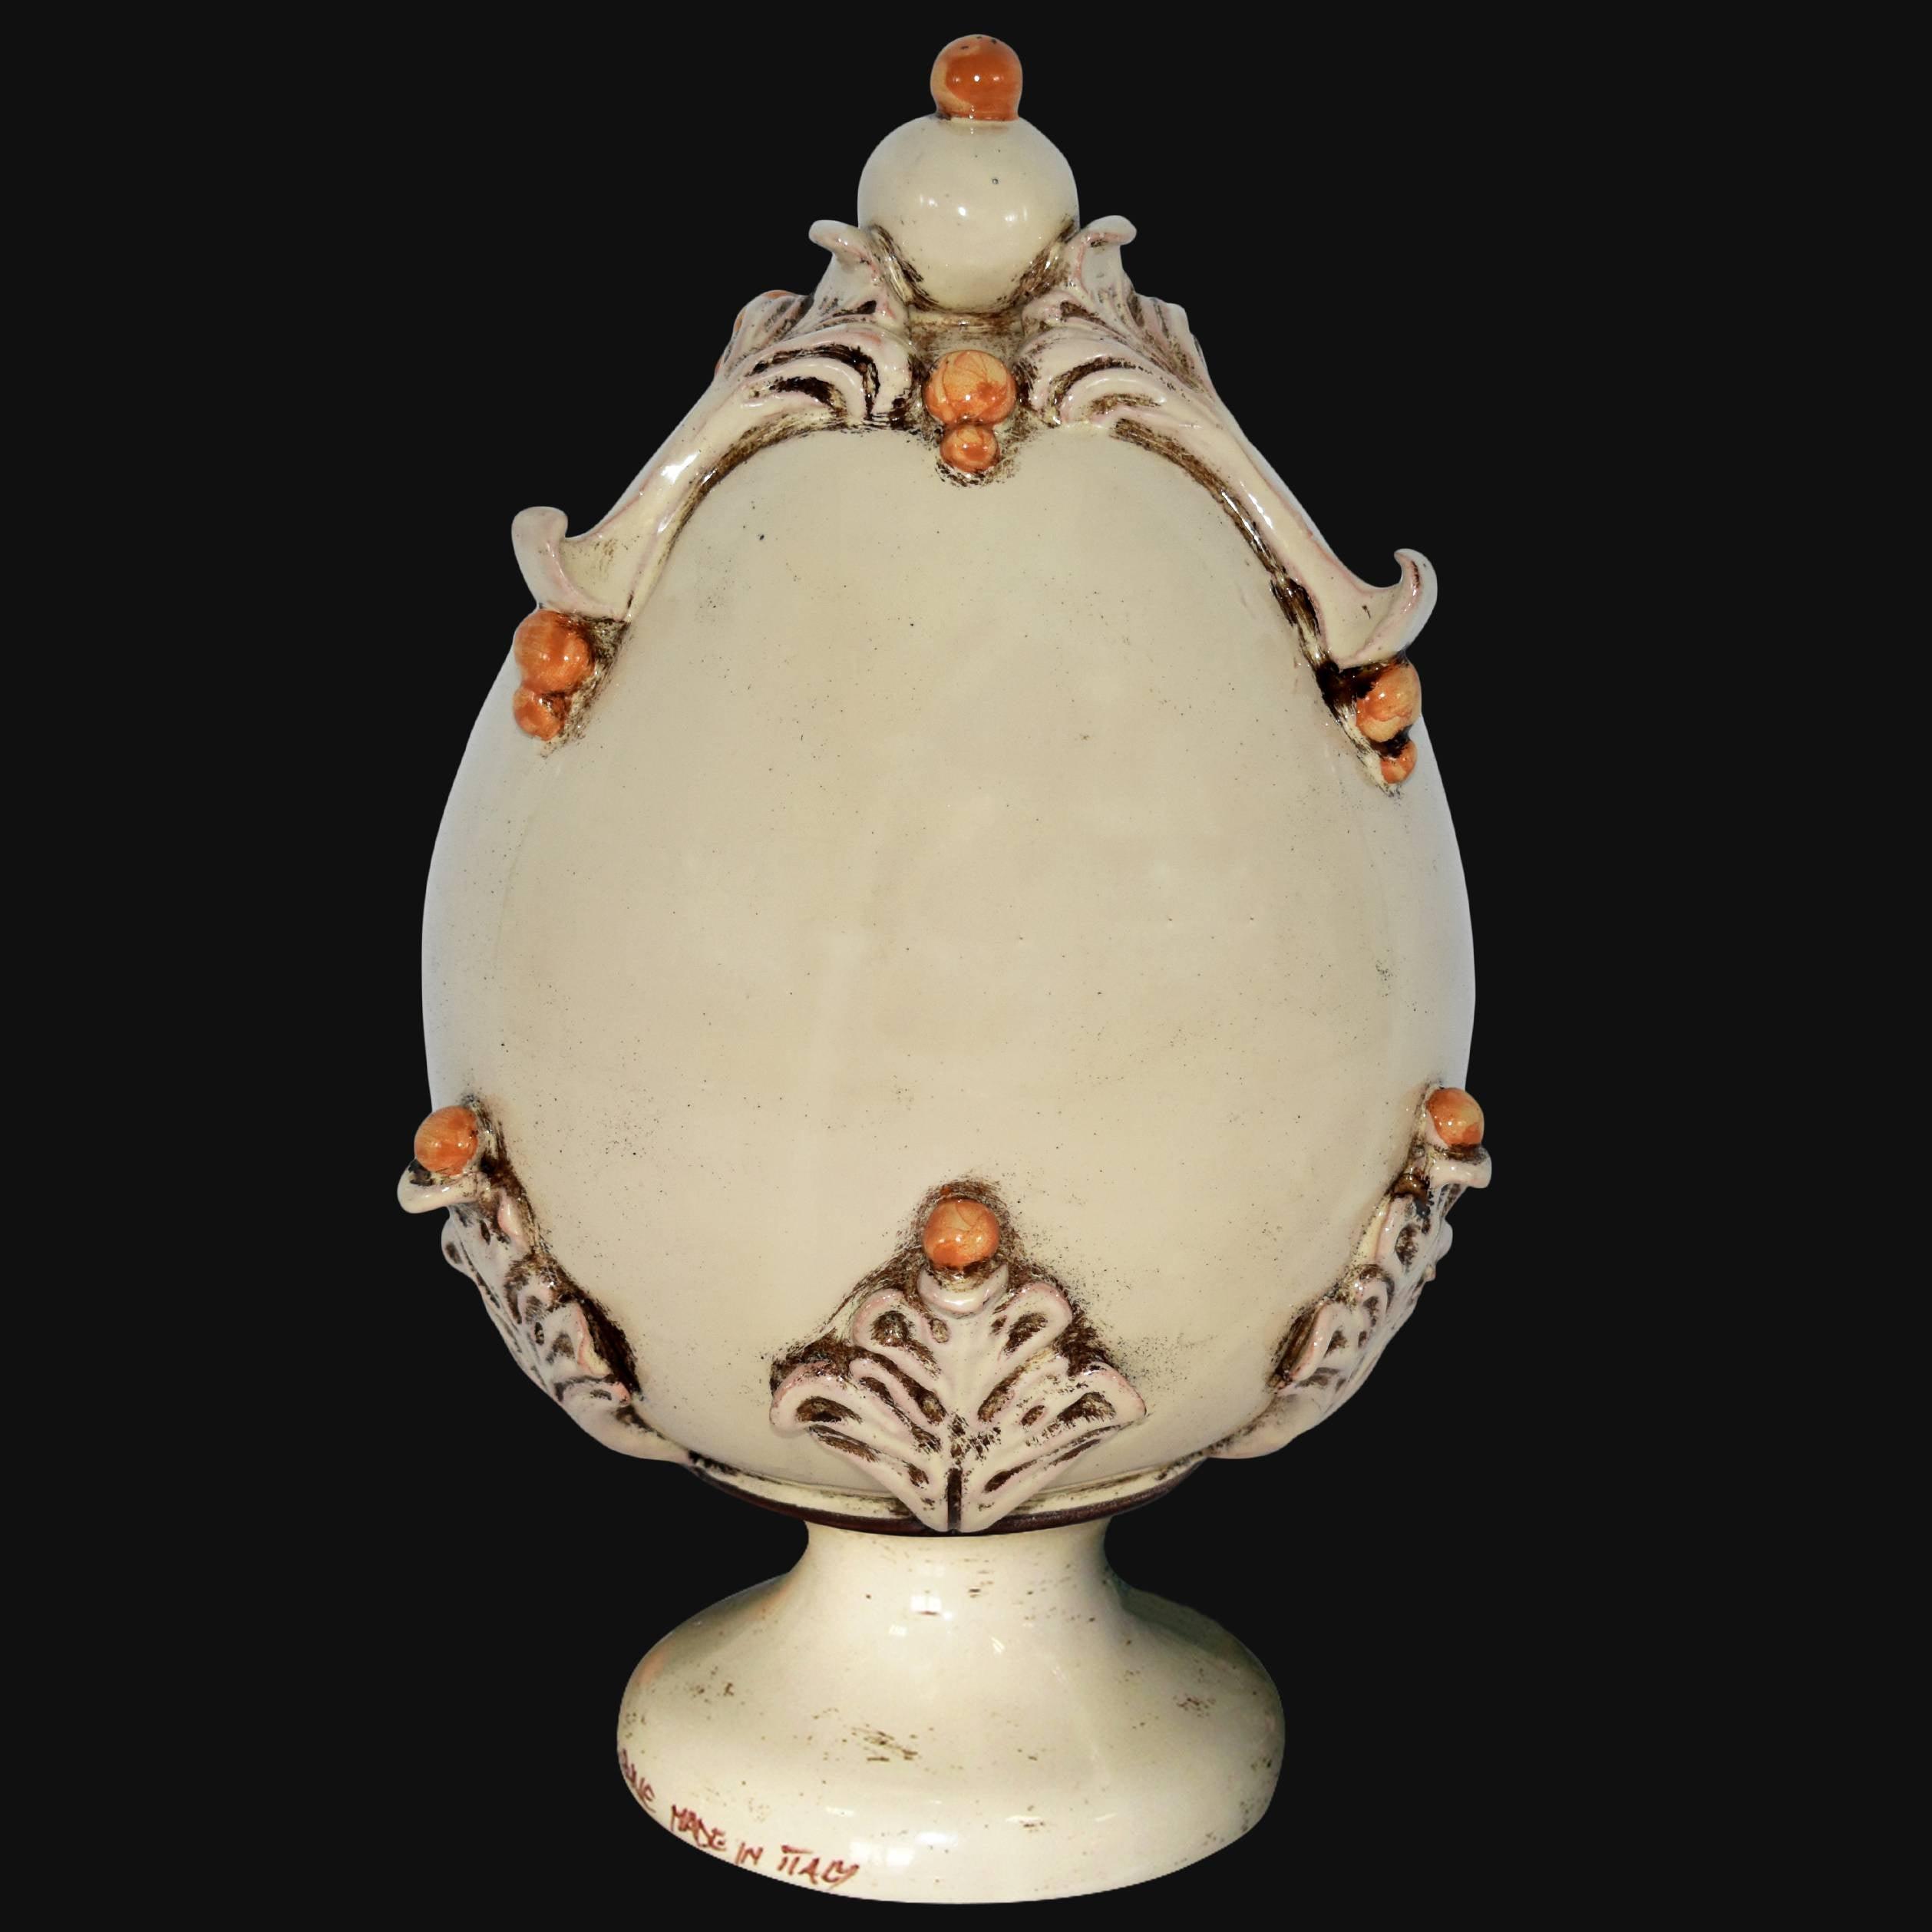 Uovo in ceramica h 25 plastico Sofia Avorio e Giallo - Ceramiche di Caltagirone - Ceramiche di Caltagirone Sofia